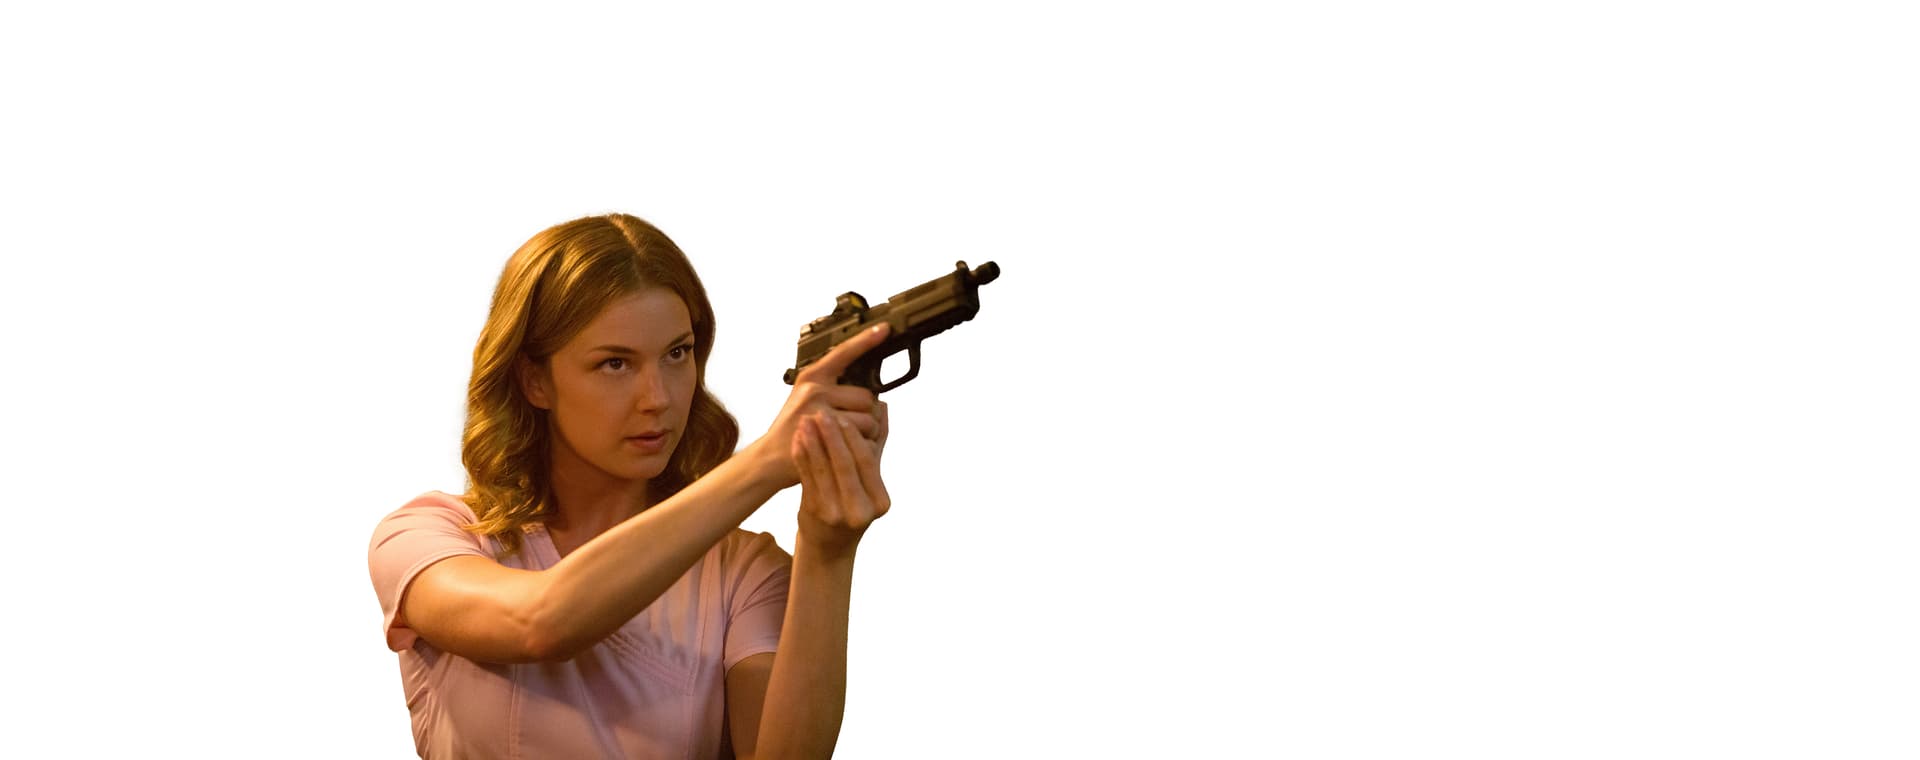 Agent 13 (Sharon Carter)